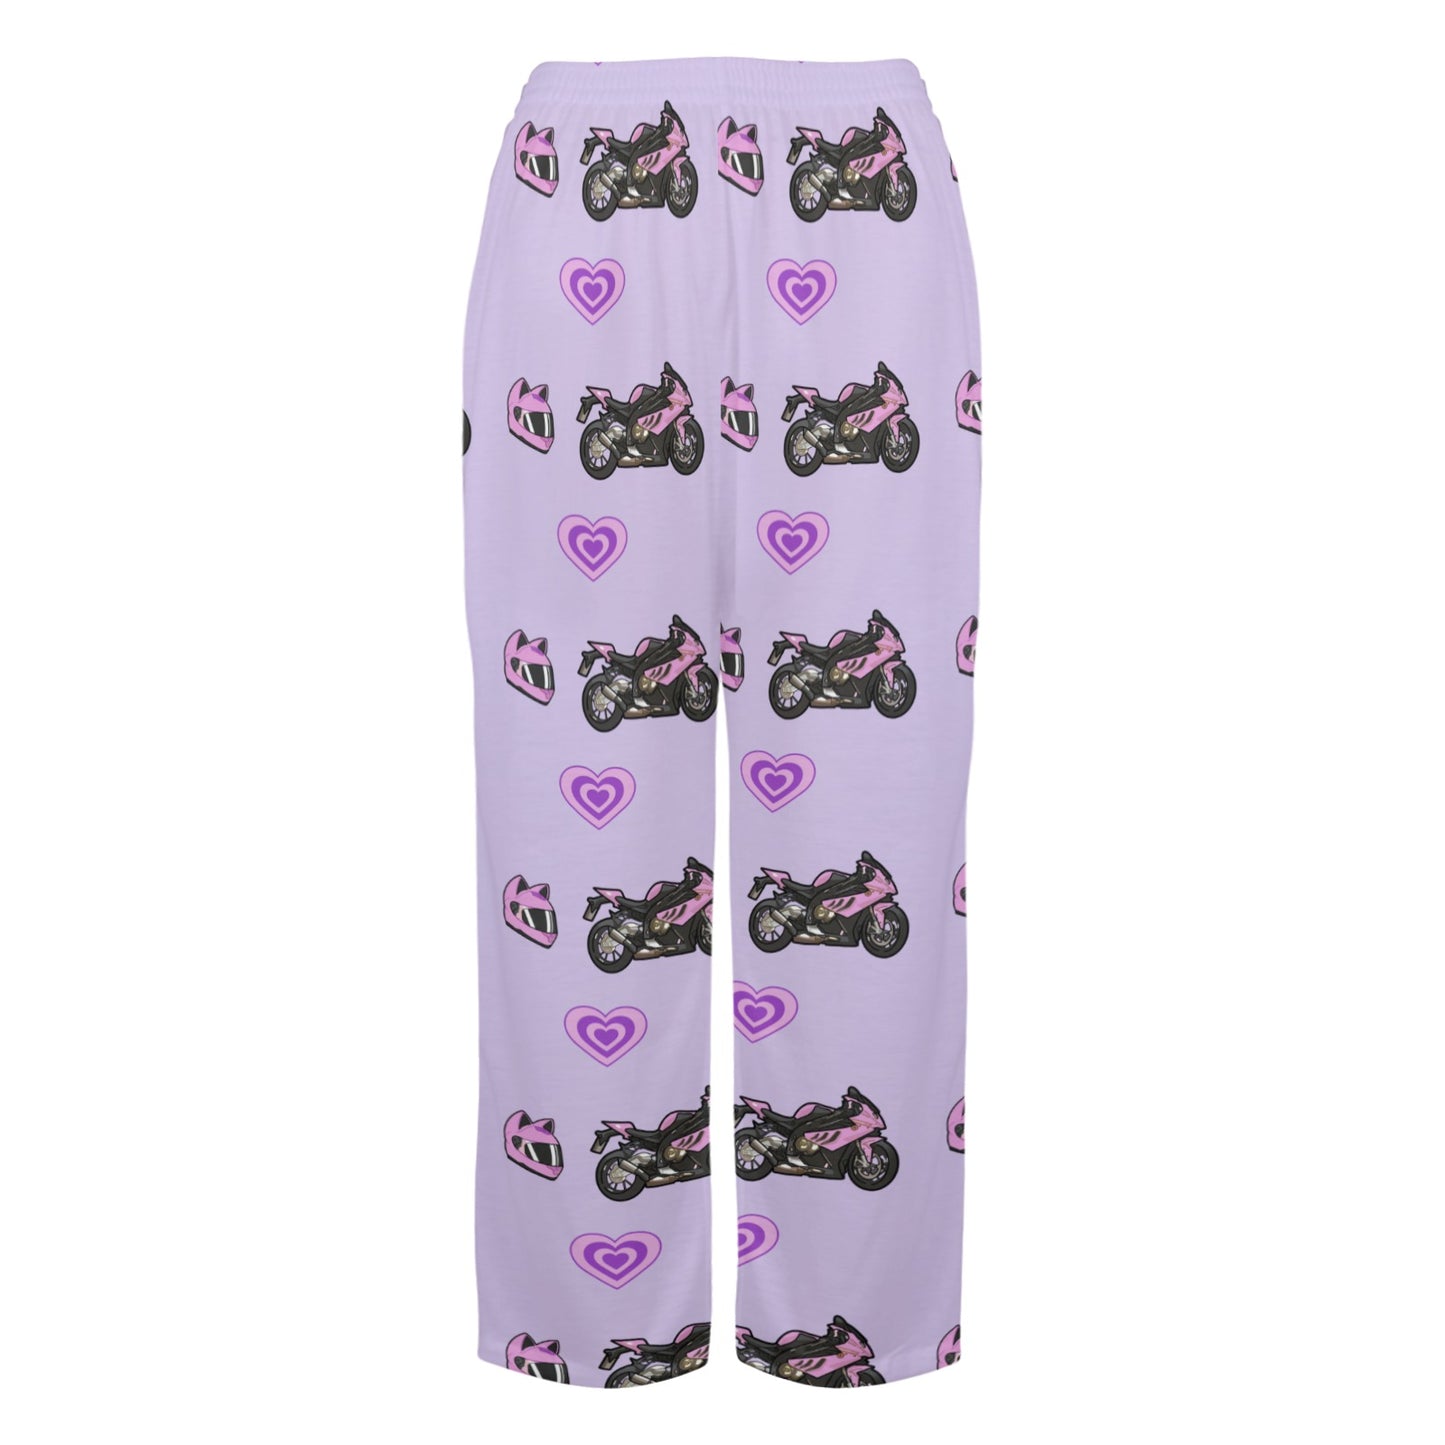 S 1000 RR Purple Pajama Pants Women's